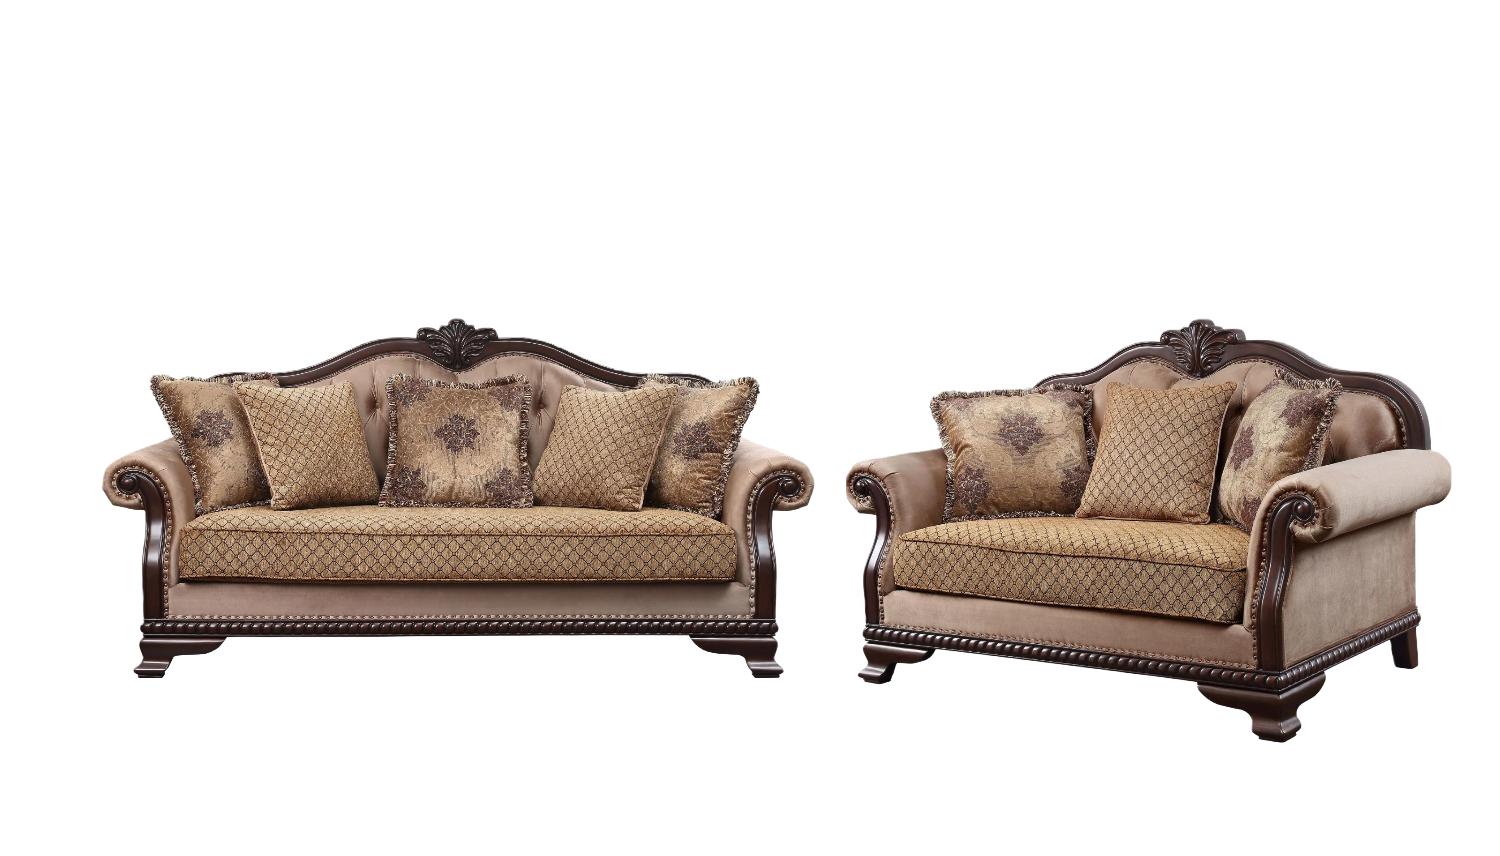 Classic Sofa and Loveseat Set Chateau De Ville 58265-2pcs in Tan Fabric